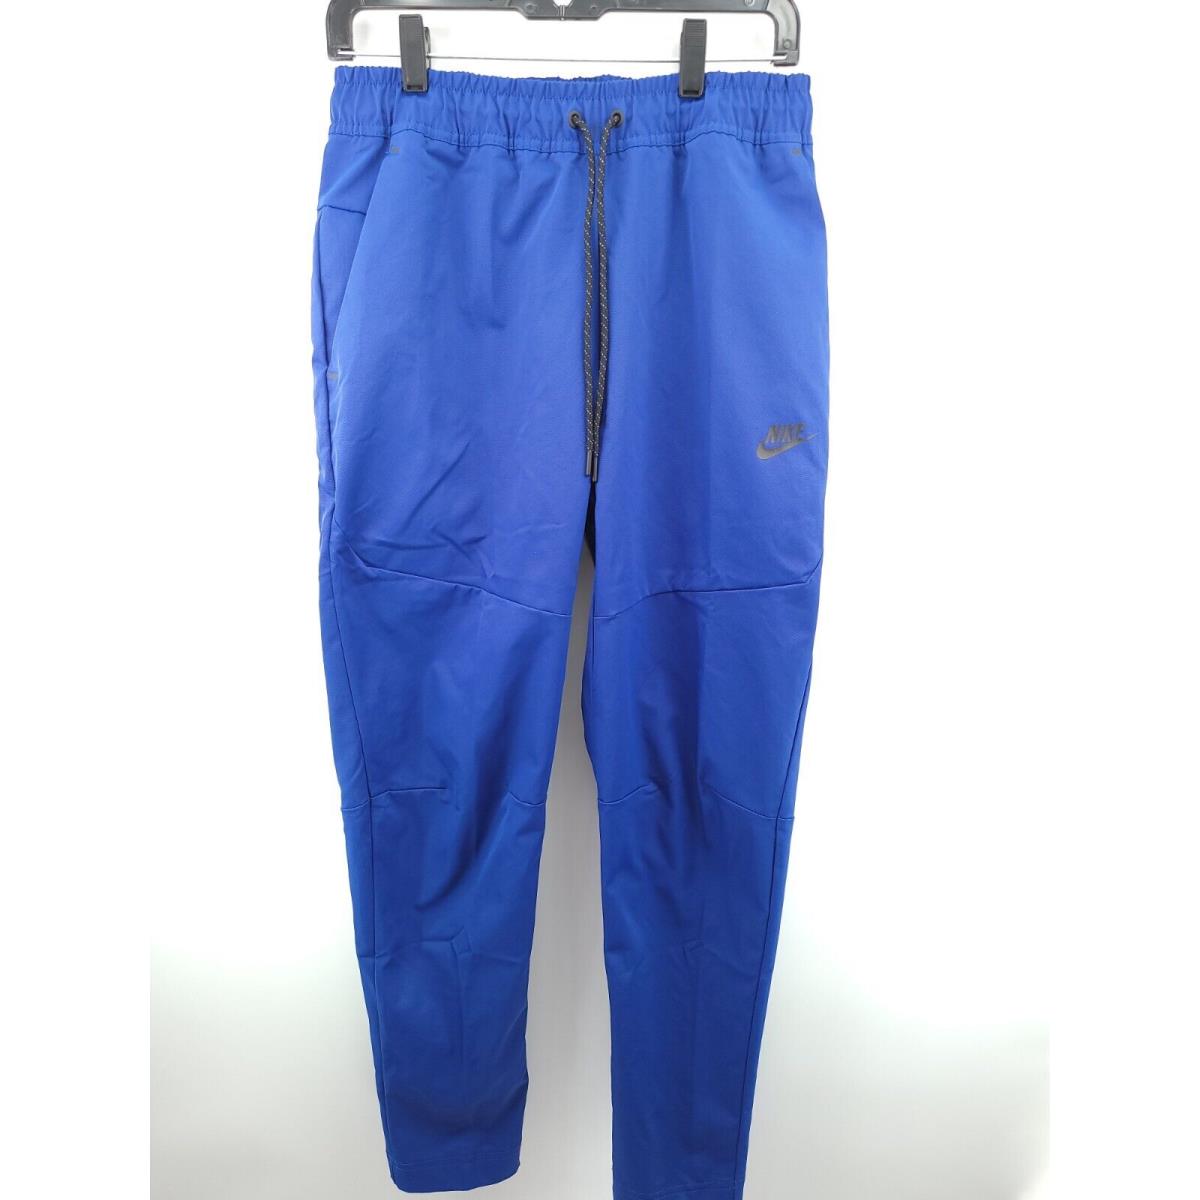 Nike Mens Tech Pack Woven Sweatpants Pants Size Small Royal Blue CU4483 455